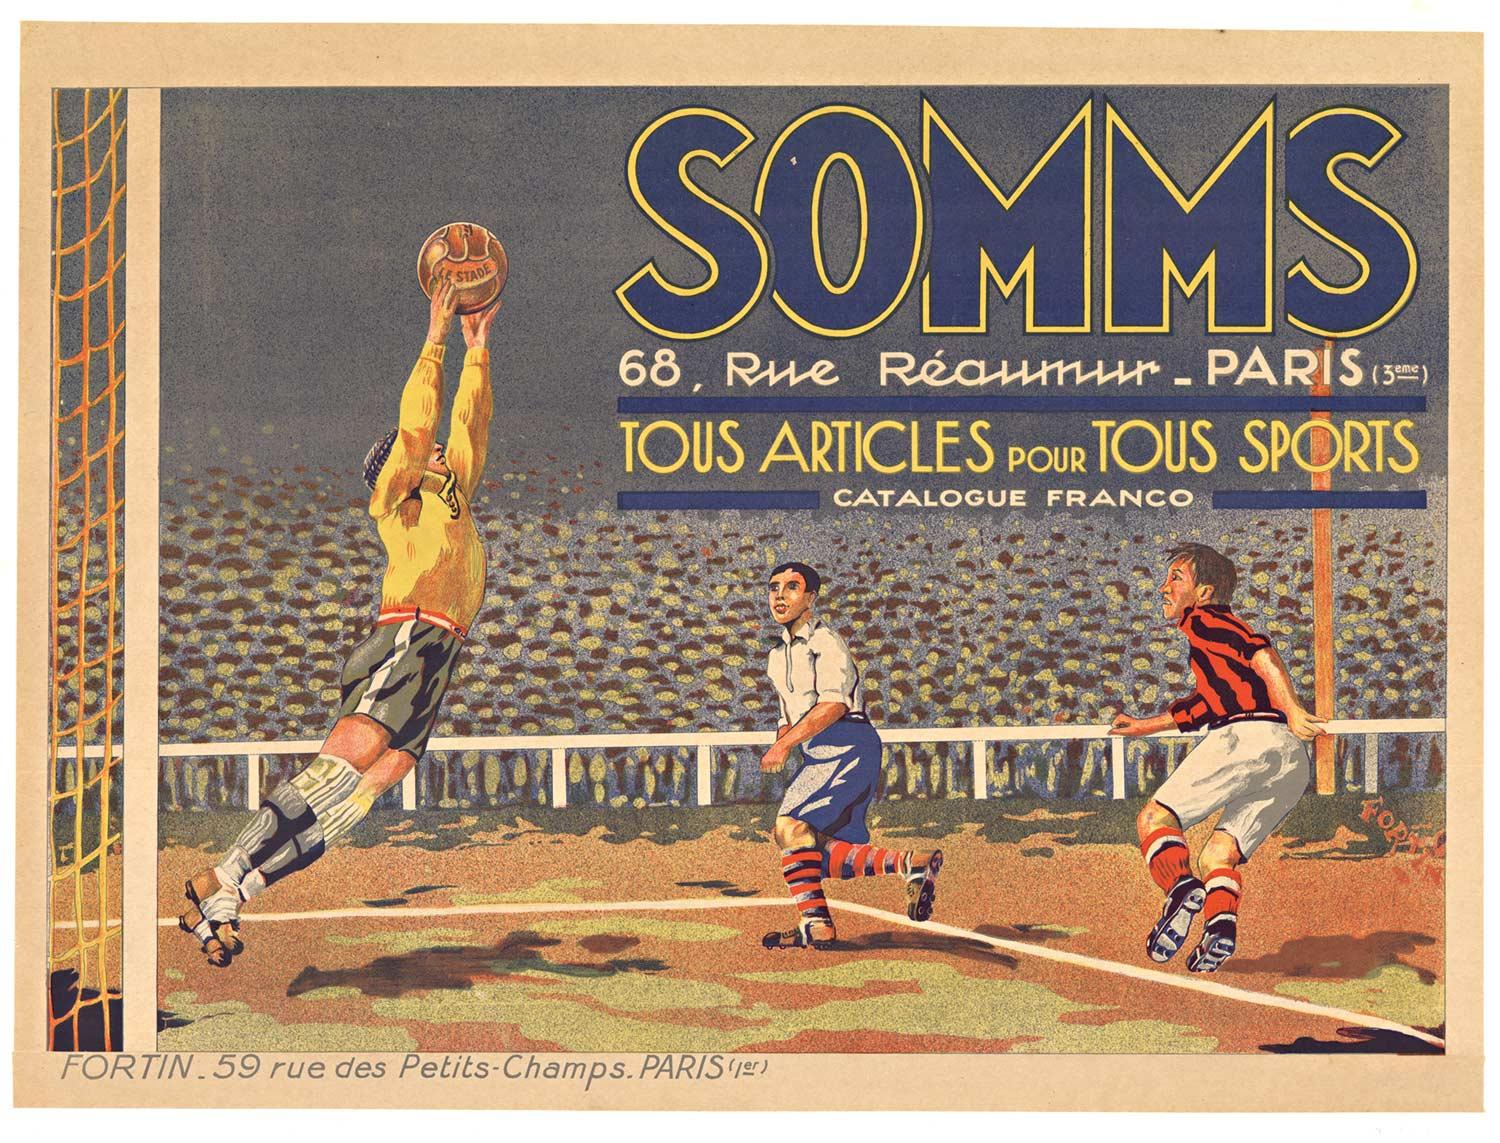 Original "Somms" tous sports vintage soccer poster